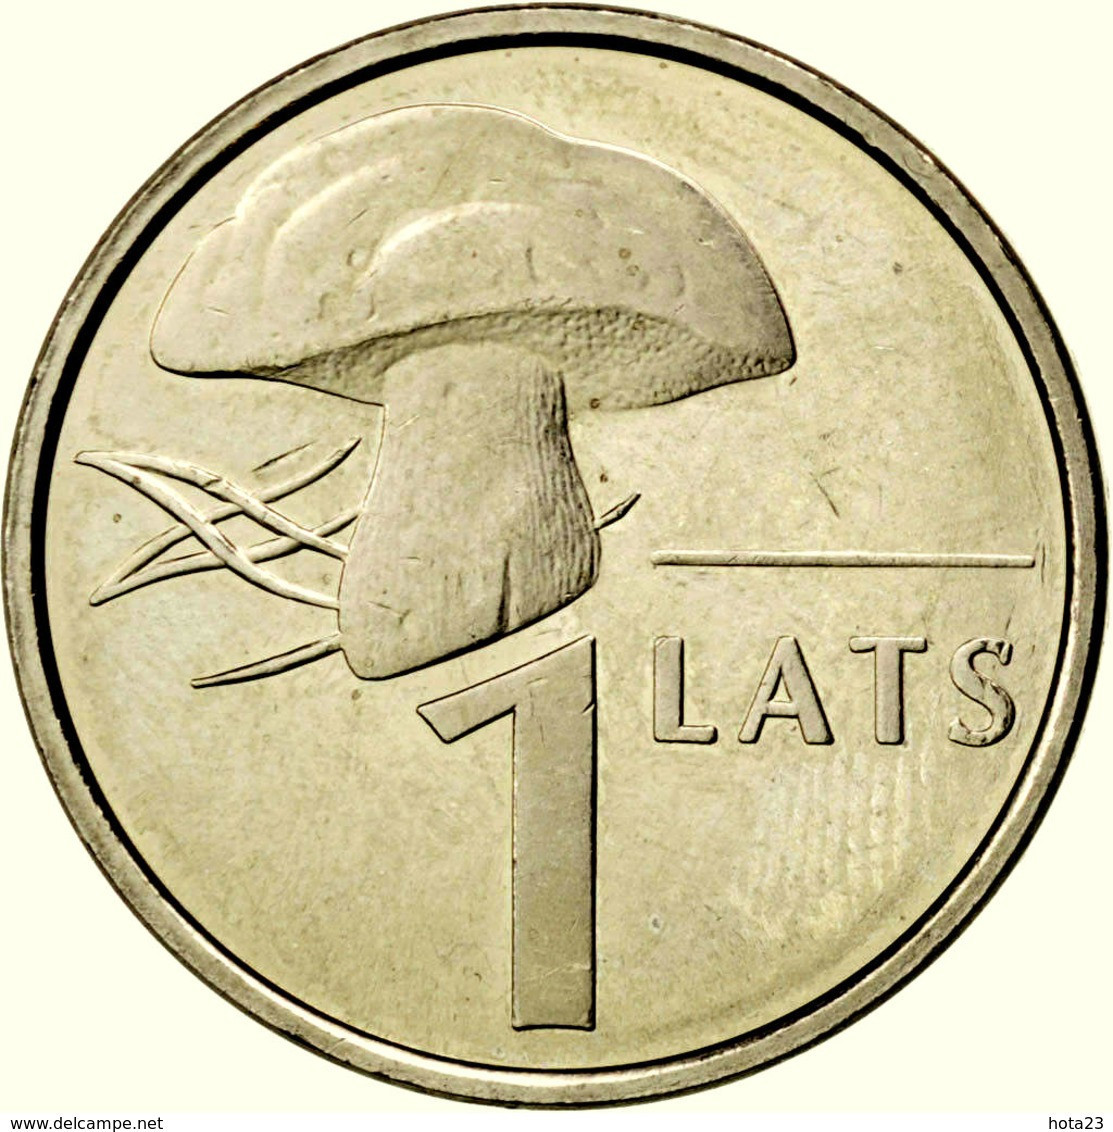 Latvia 1 Lats 2004 Mushroom Pilz KM 67 UNC FROM MINT ROLL - Latvia